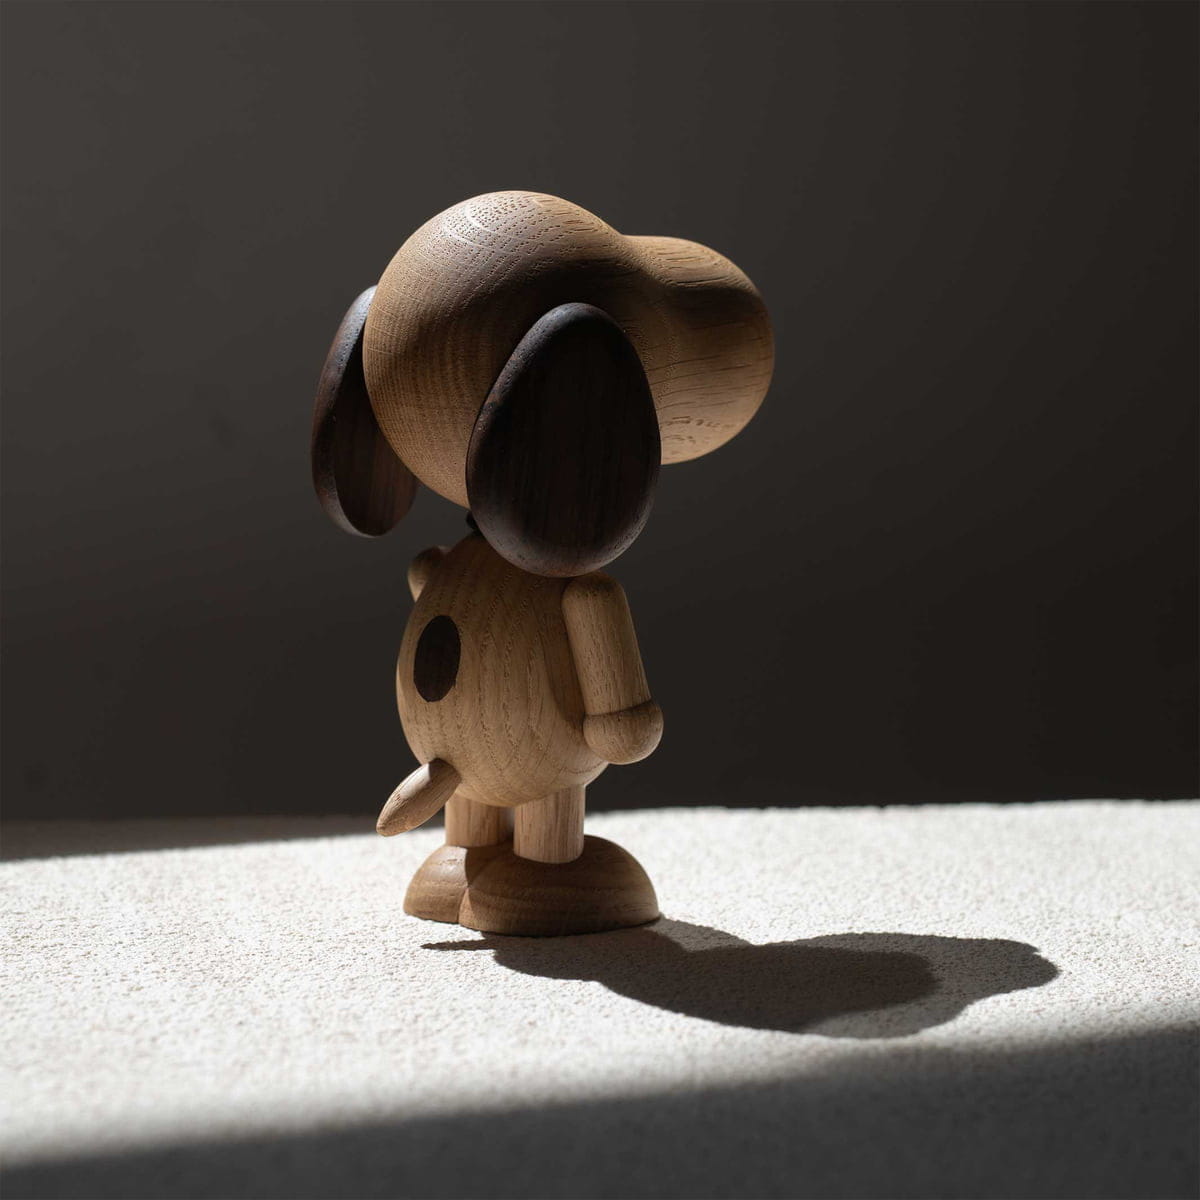 boyhood Snoopy Peanuts ™ ️ chêne de figurines en bois, petit